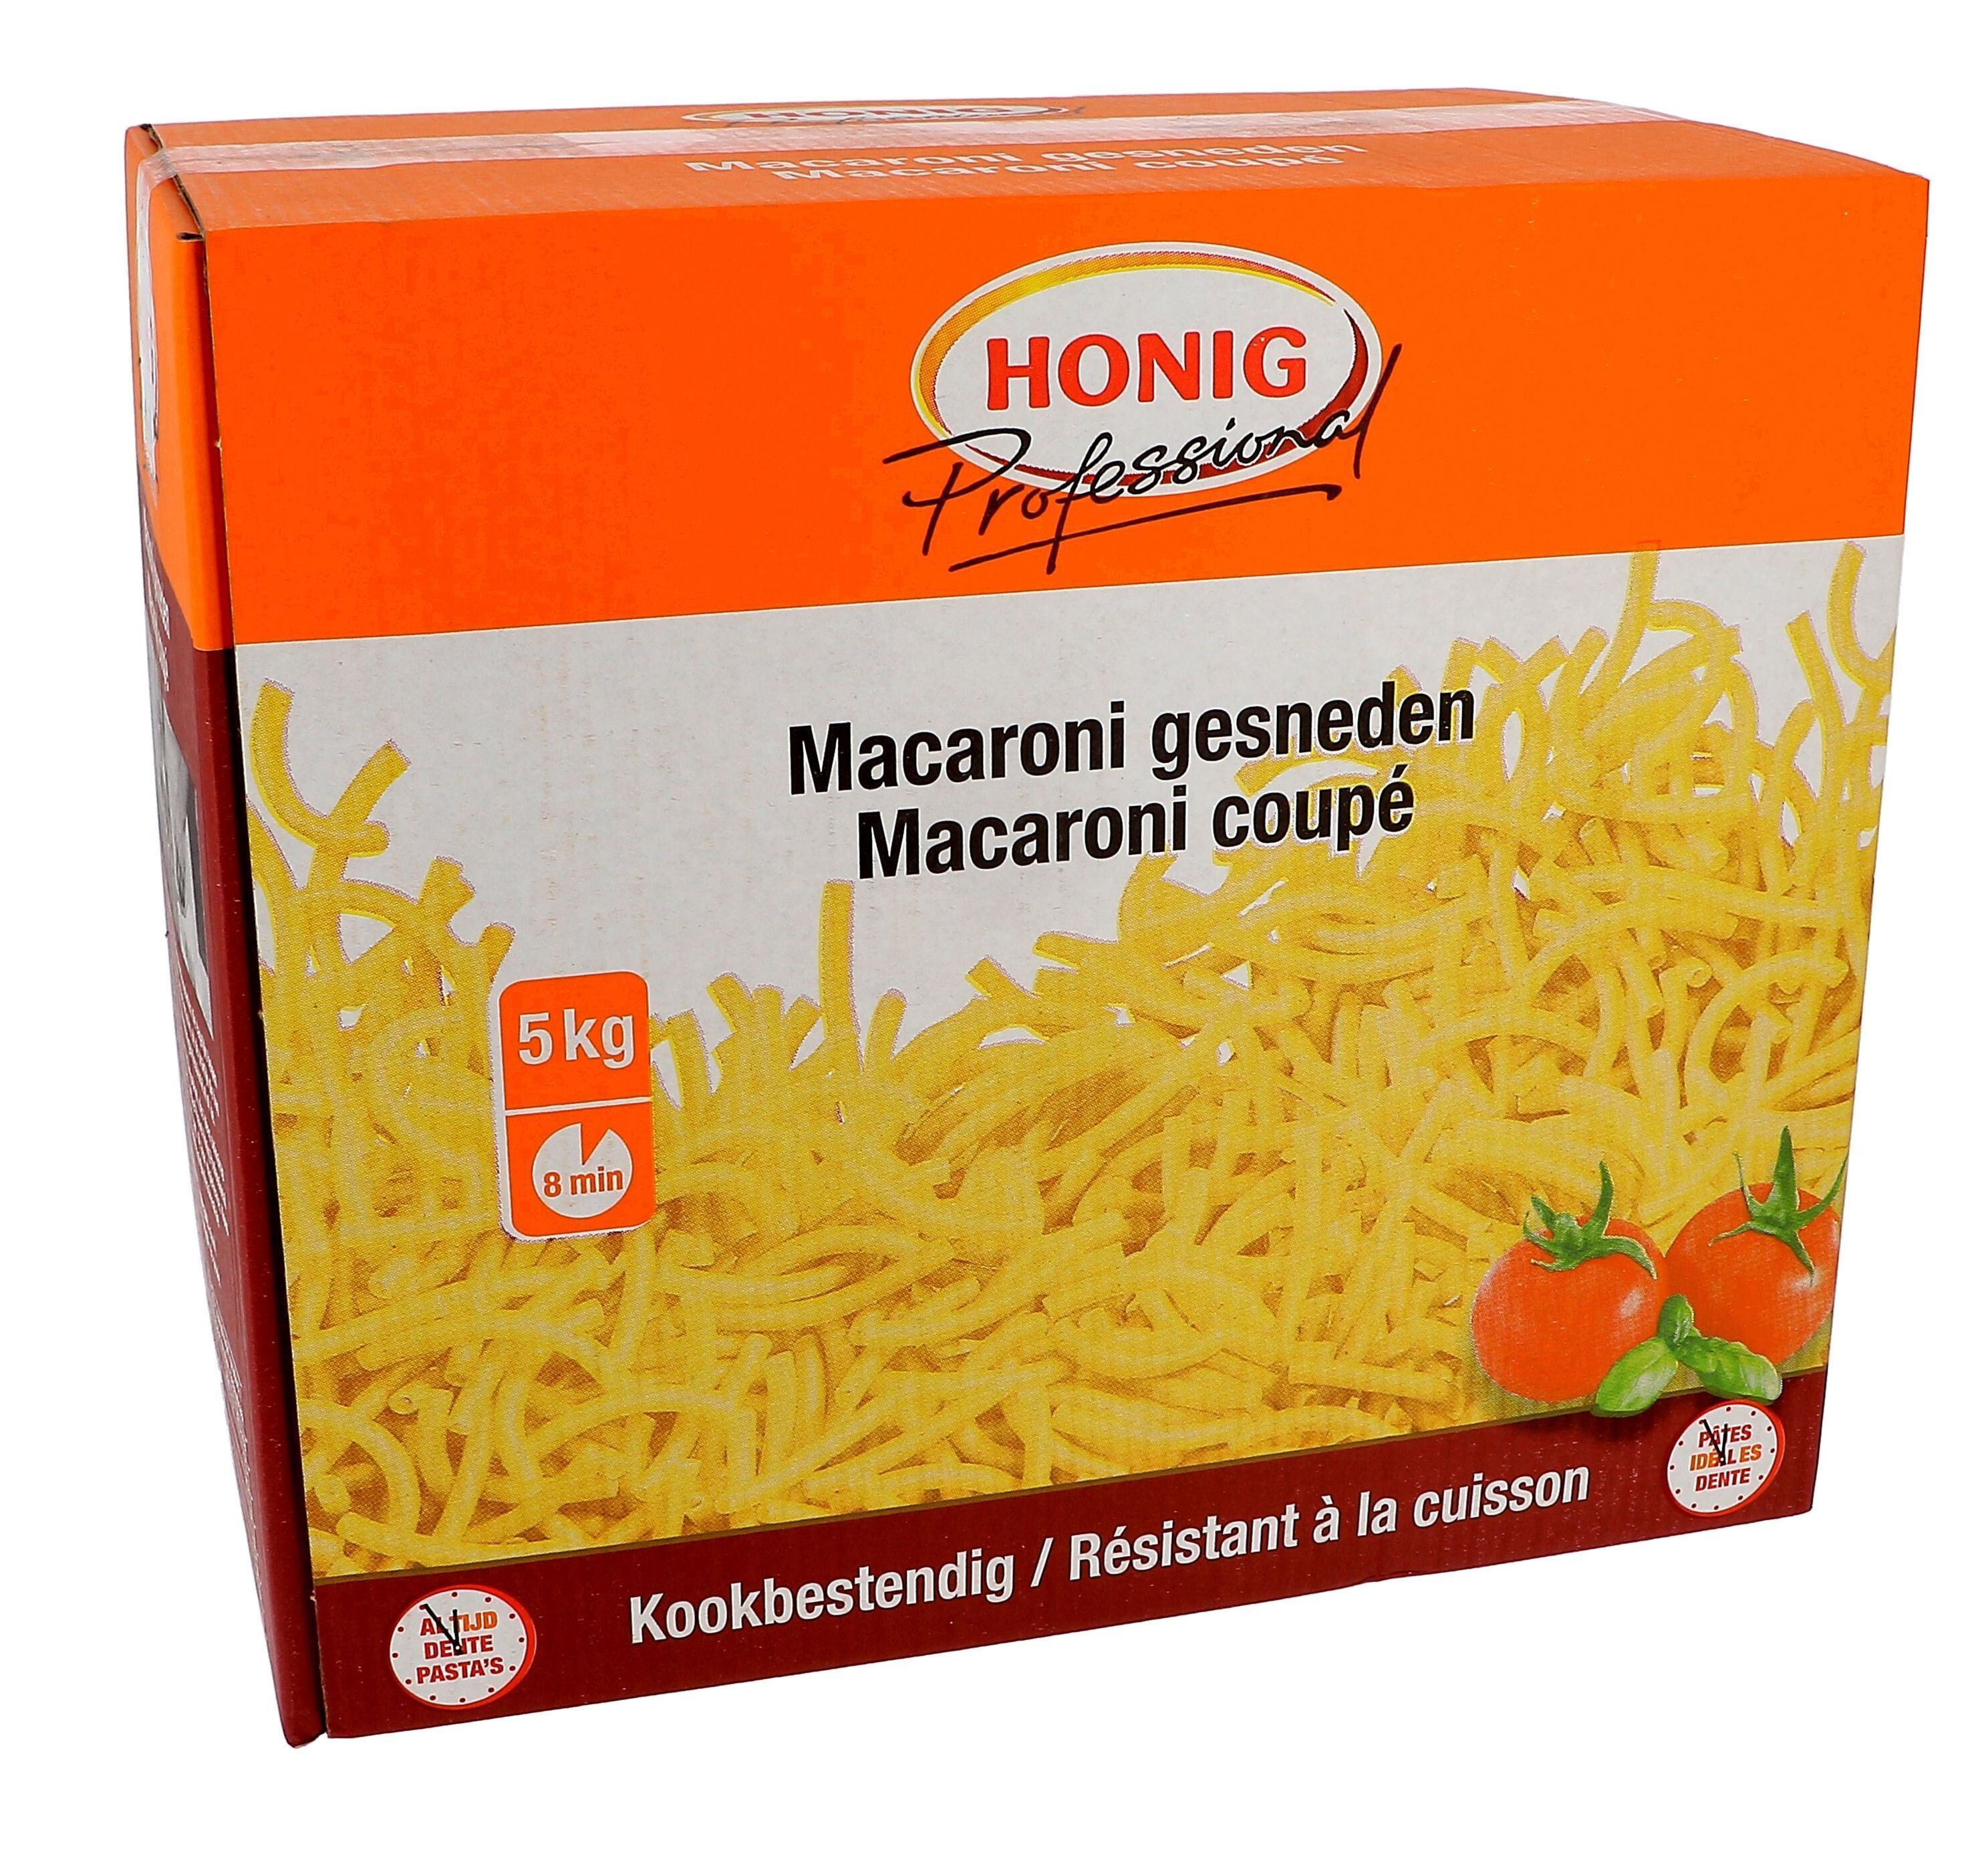 Honig maccheroni 5kg Professional pasta